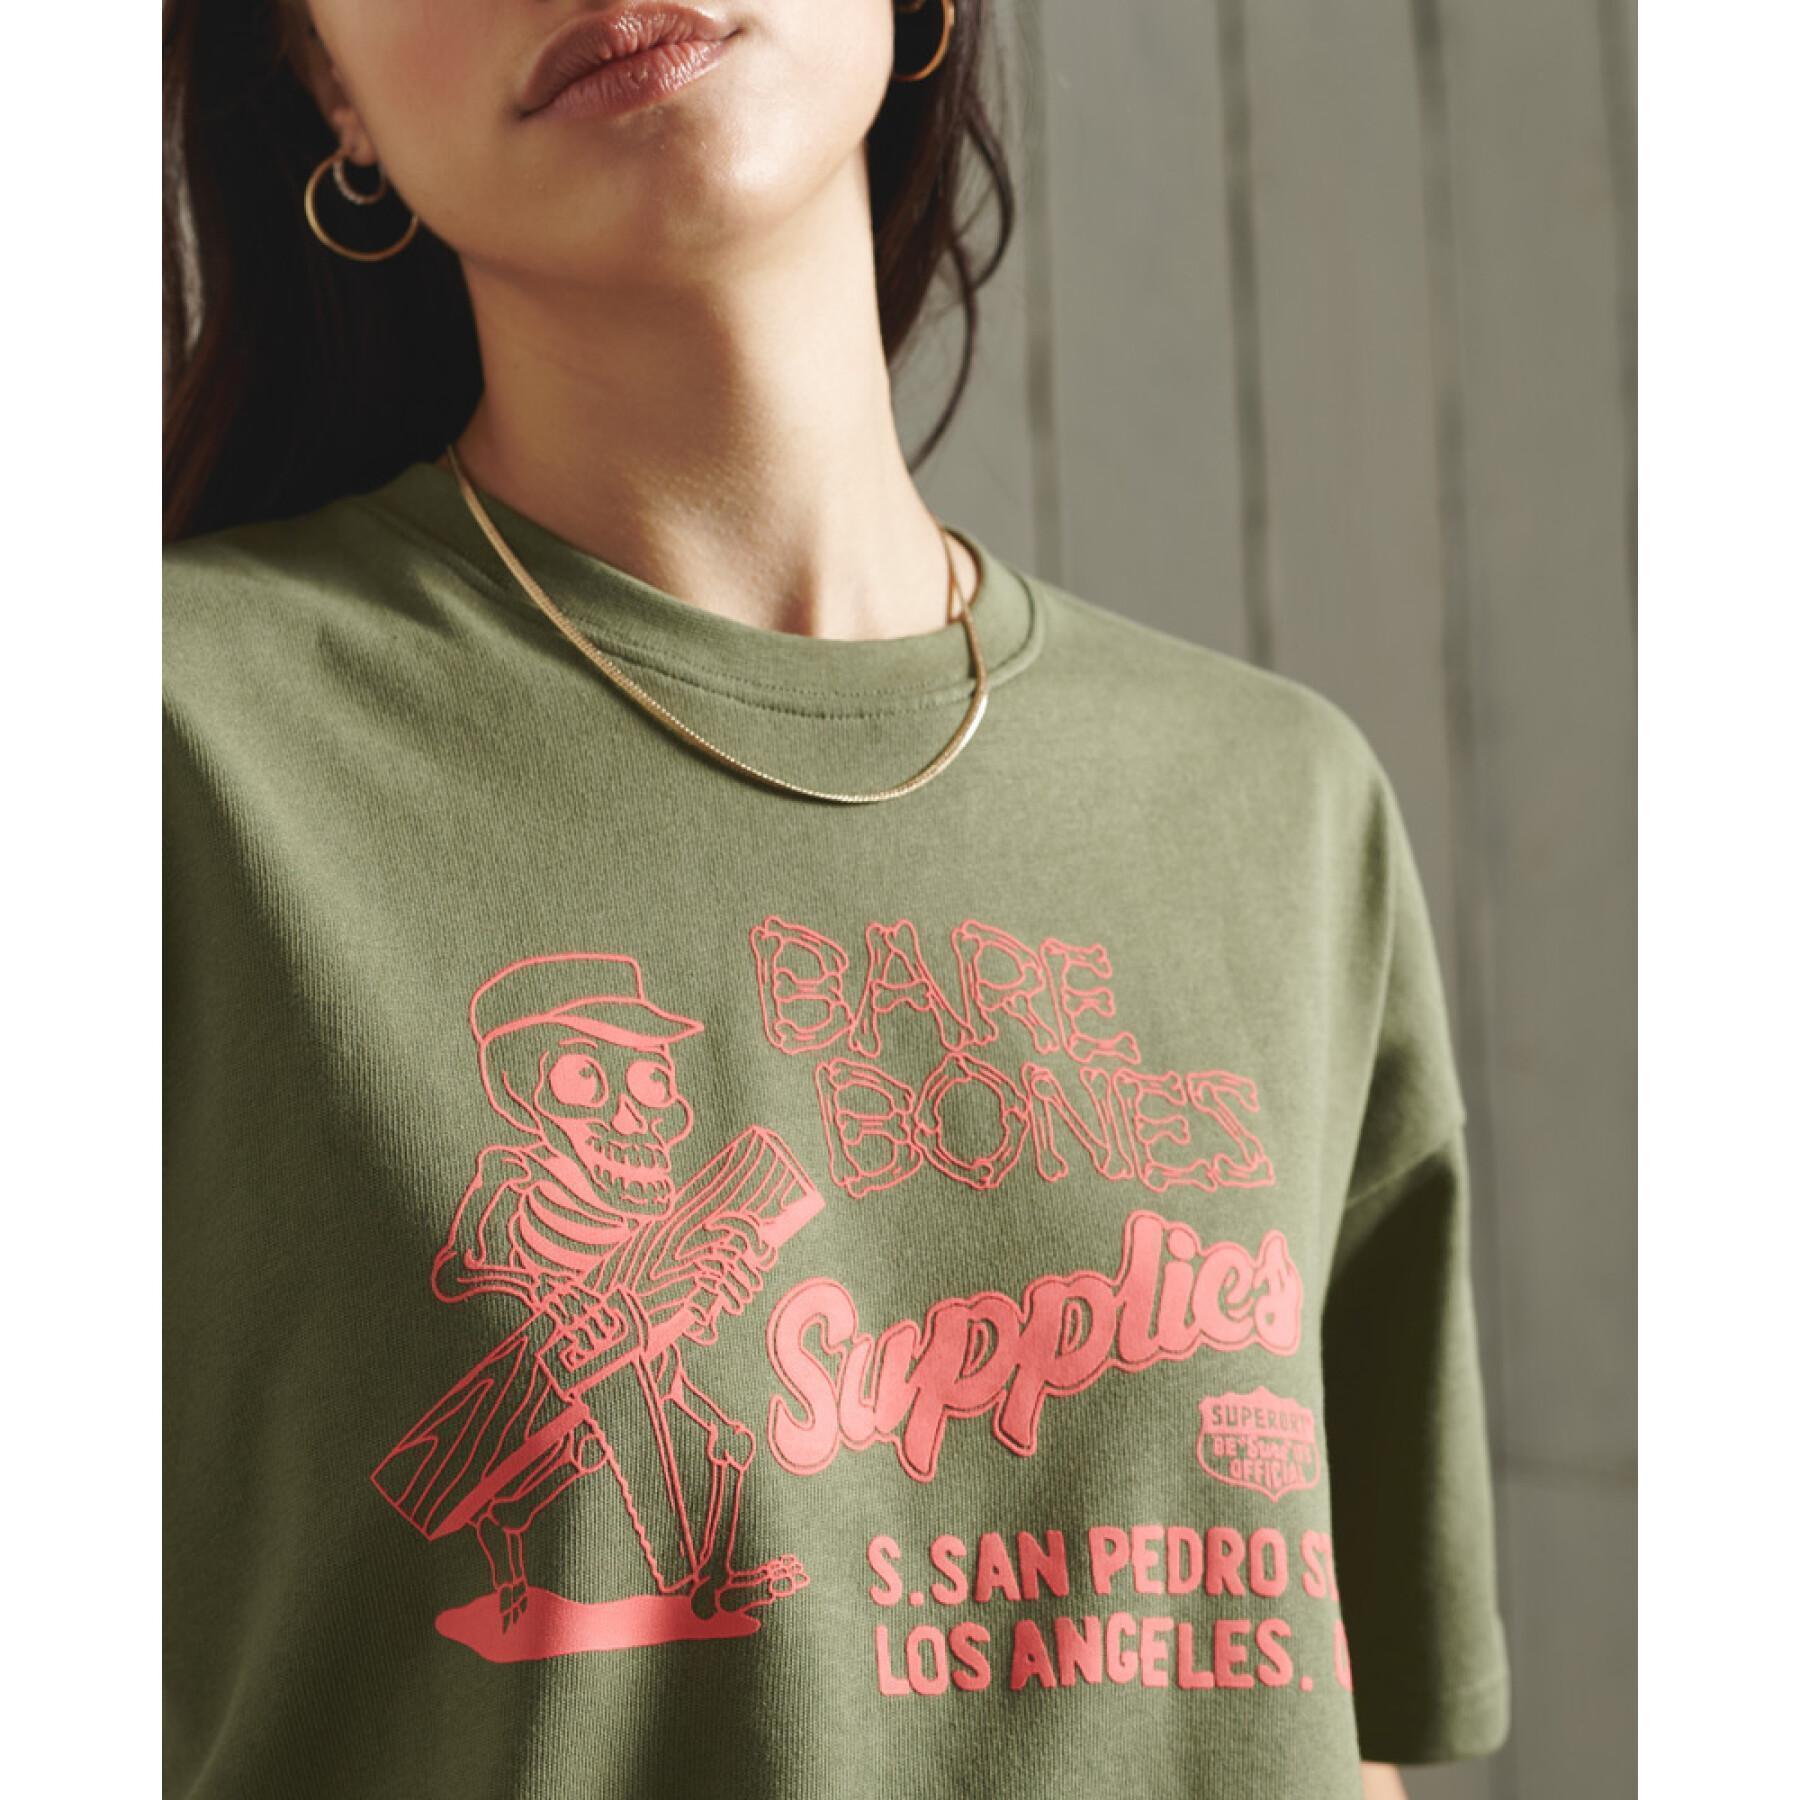 Women's oversized patterned T-shirt Superdry Workwear